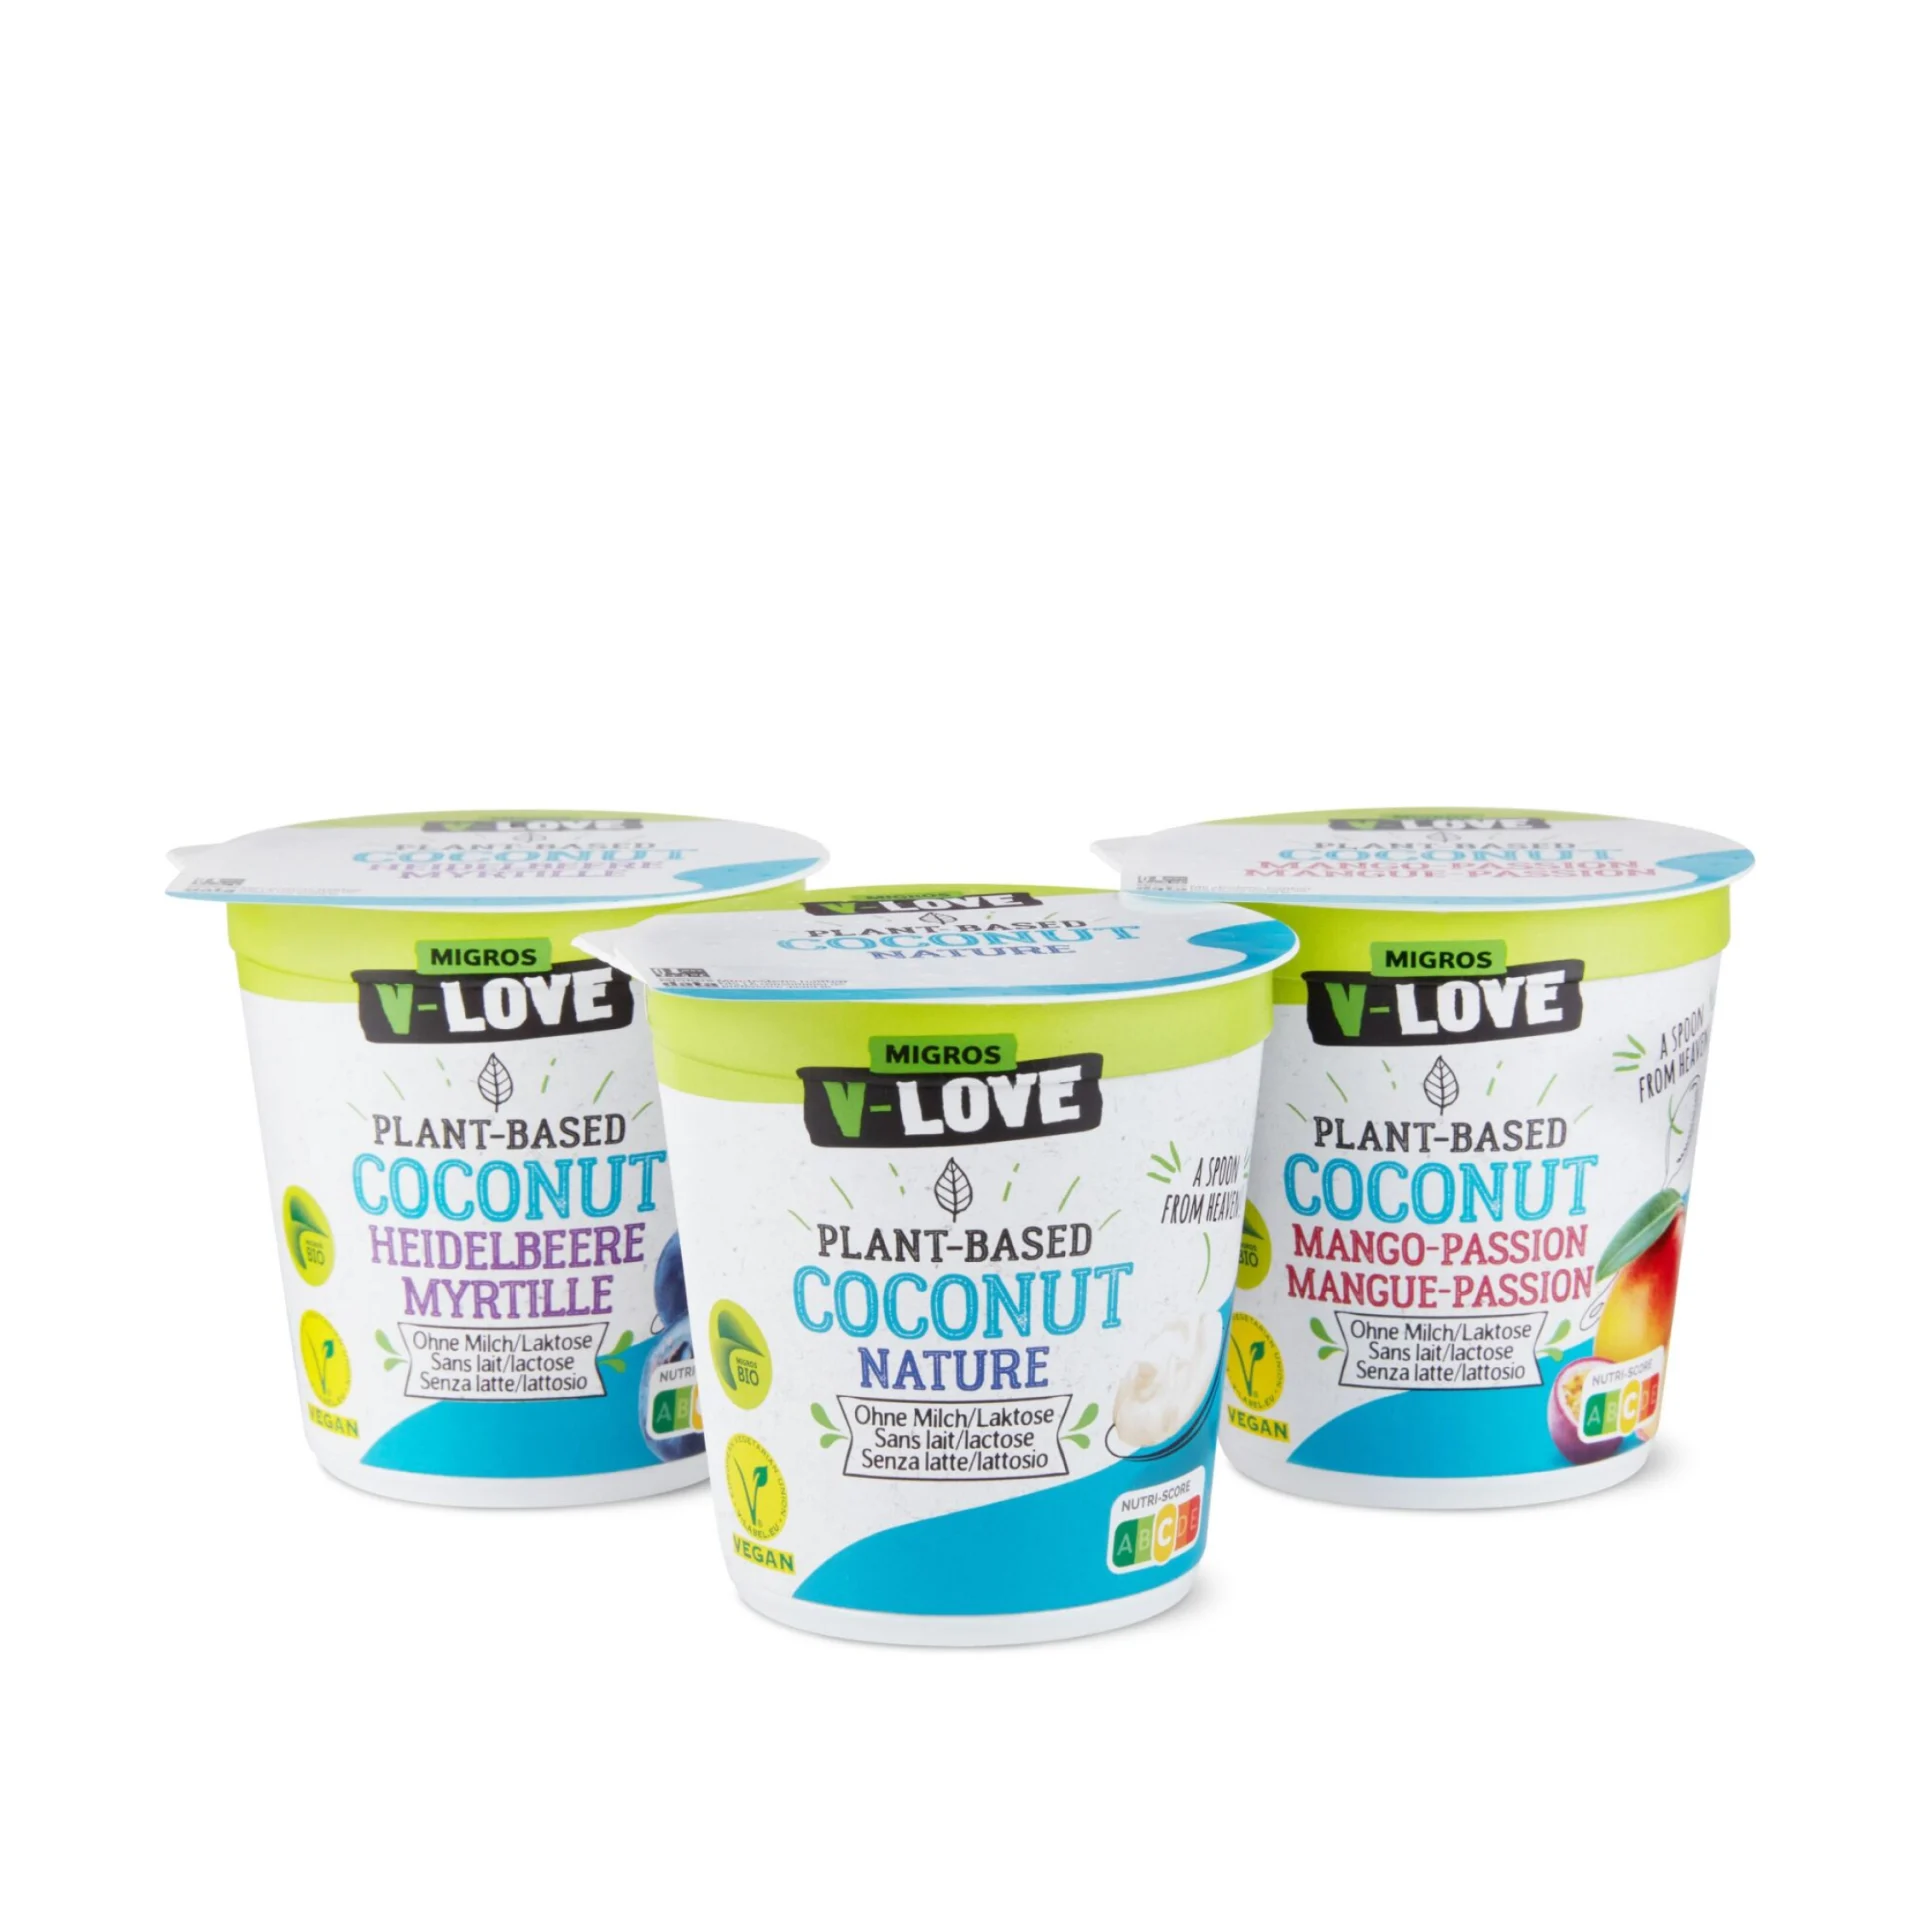 Three pack shots of different V-Love yoghurt alternatives.